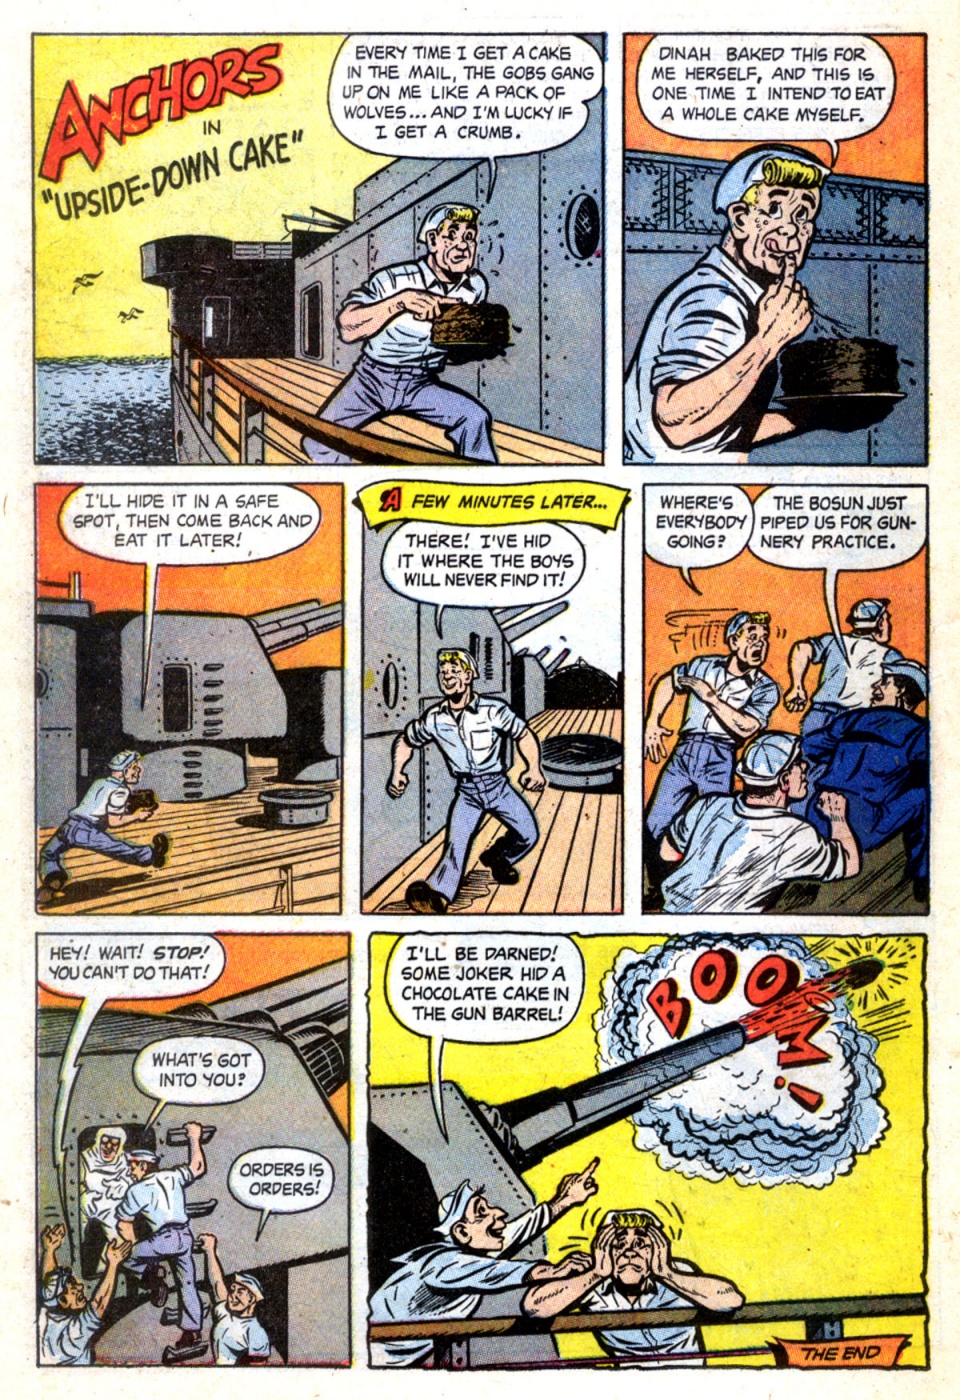 Anchors the Salt Water Daffy - Comics (c) (14)